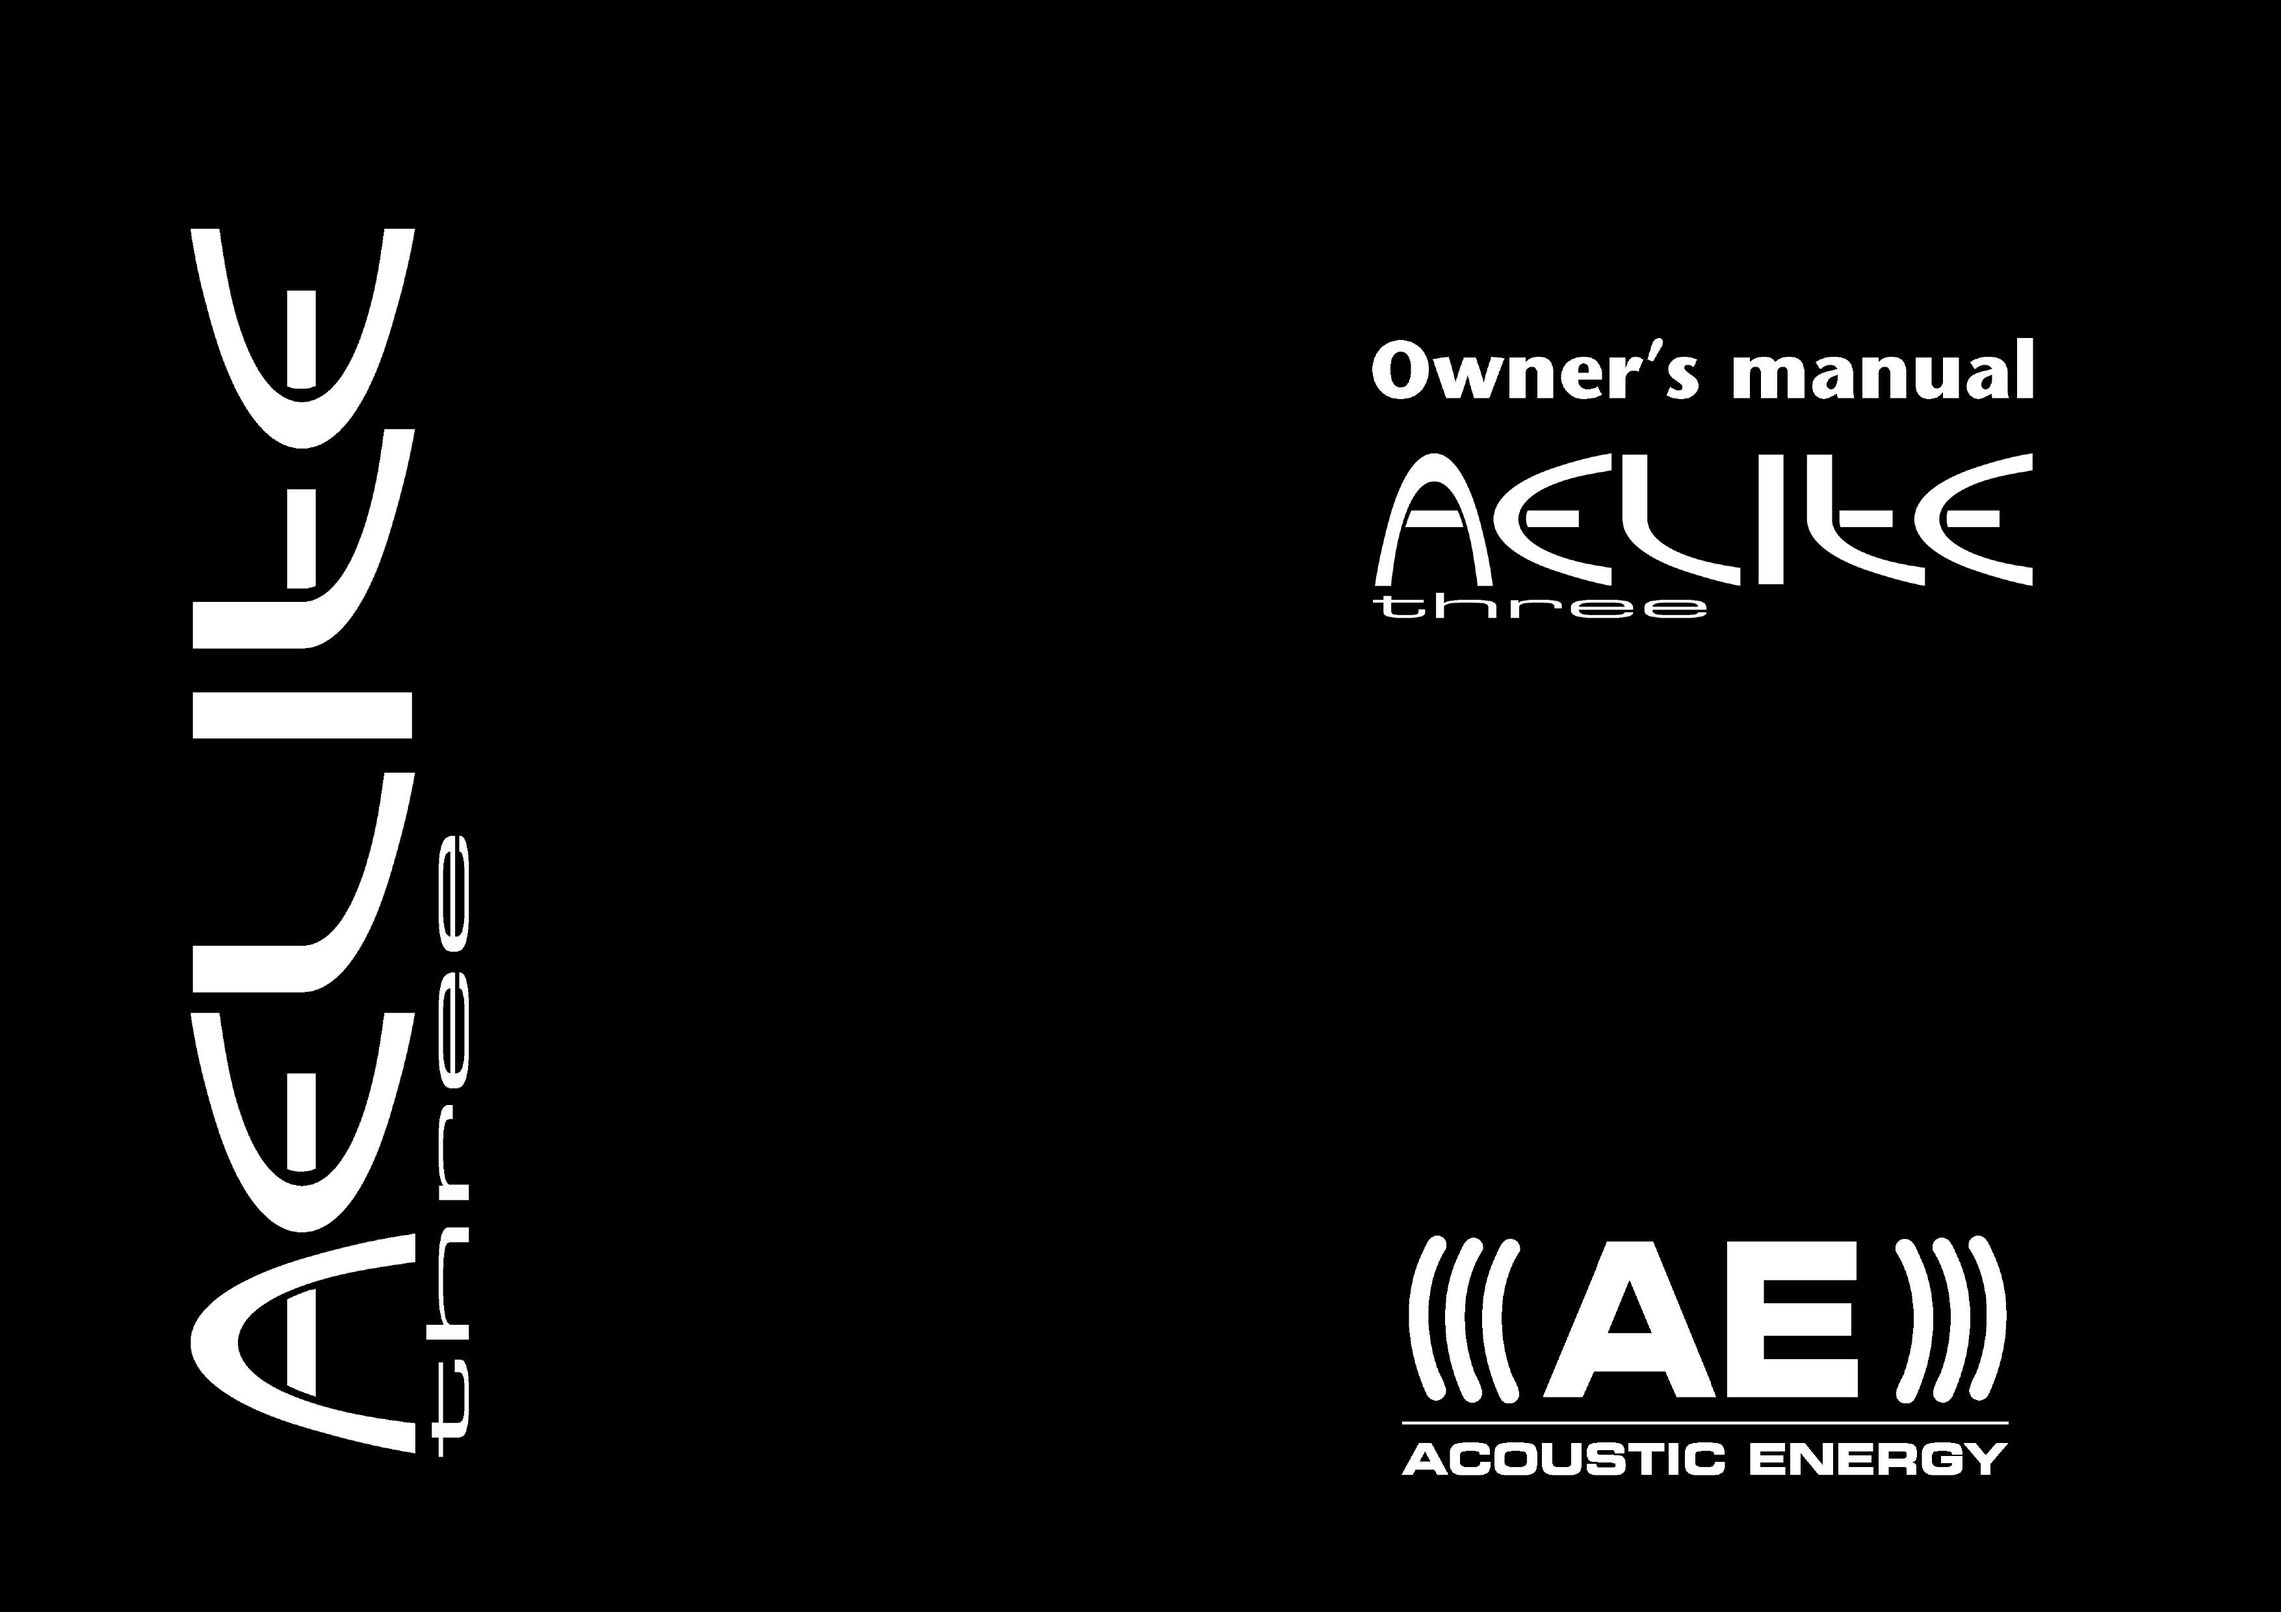 Acoustic Energy AELITE Three Speaker User Manual